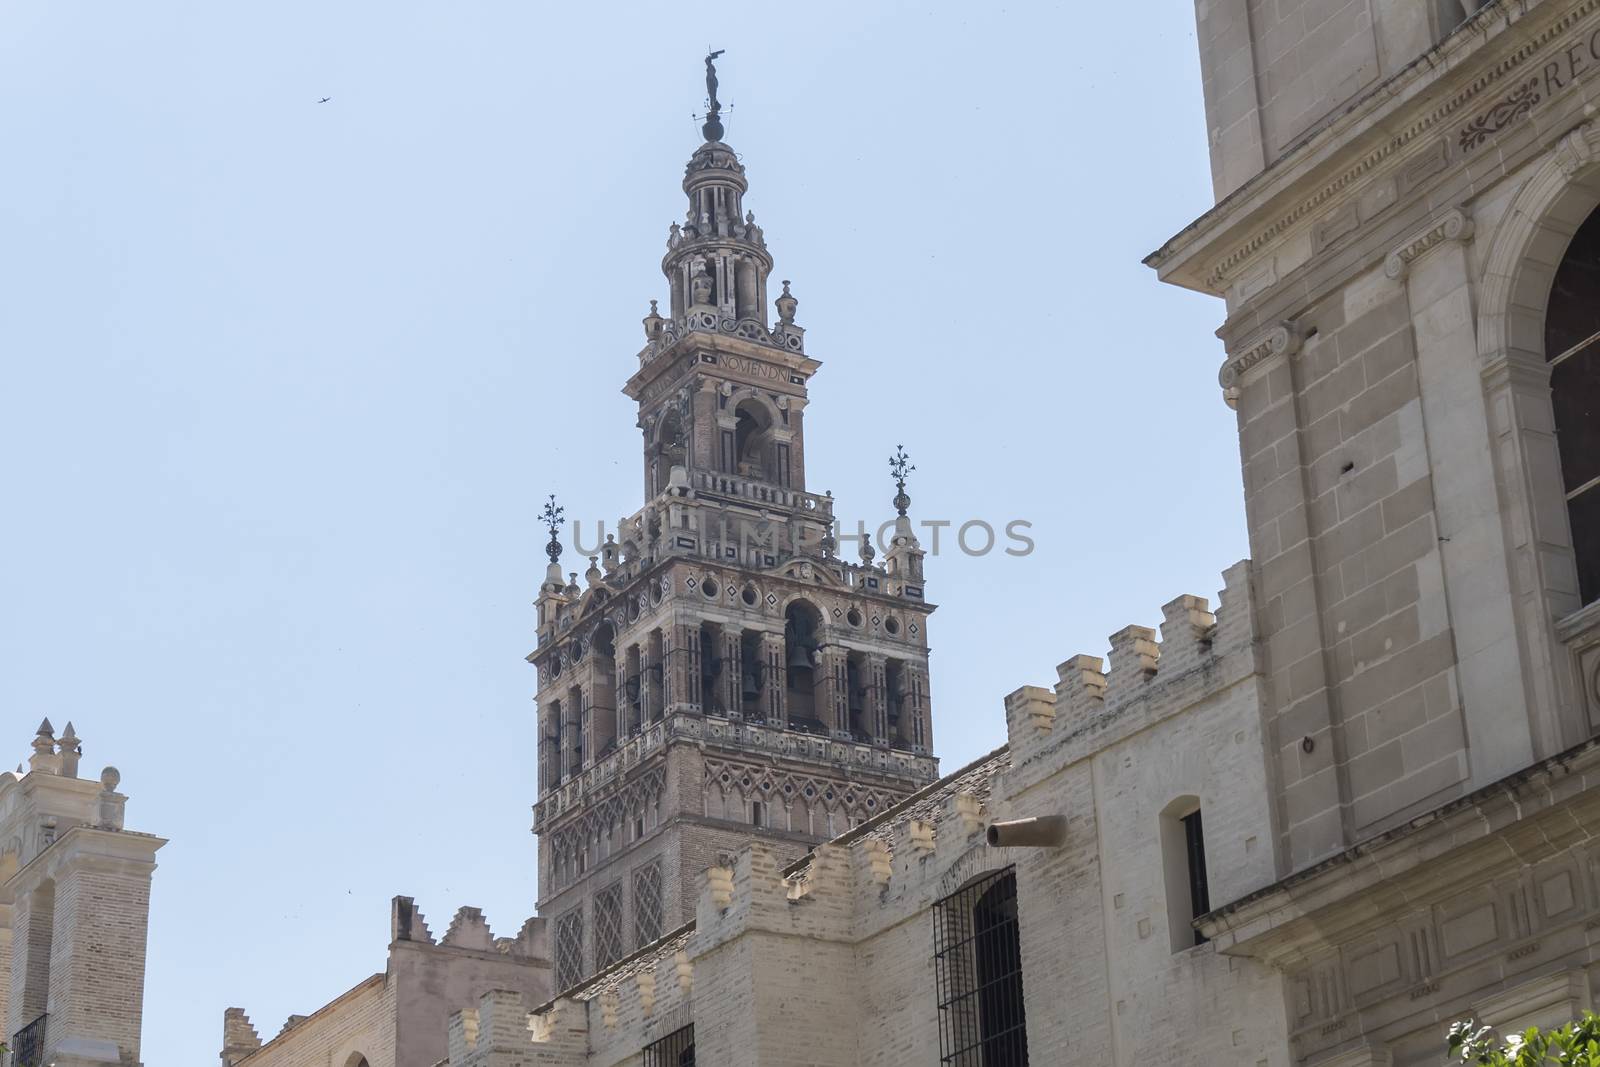 Bell tower Giralda, former minaret of Cathedral church, Seville, Spain